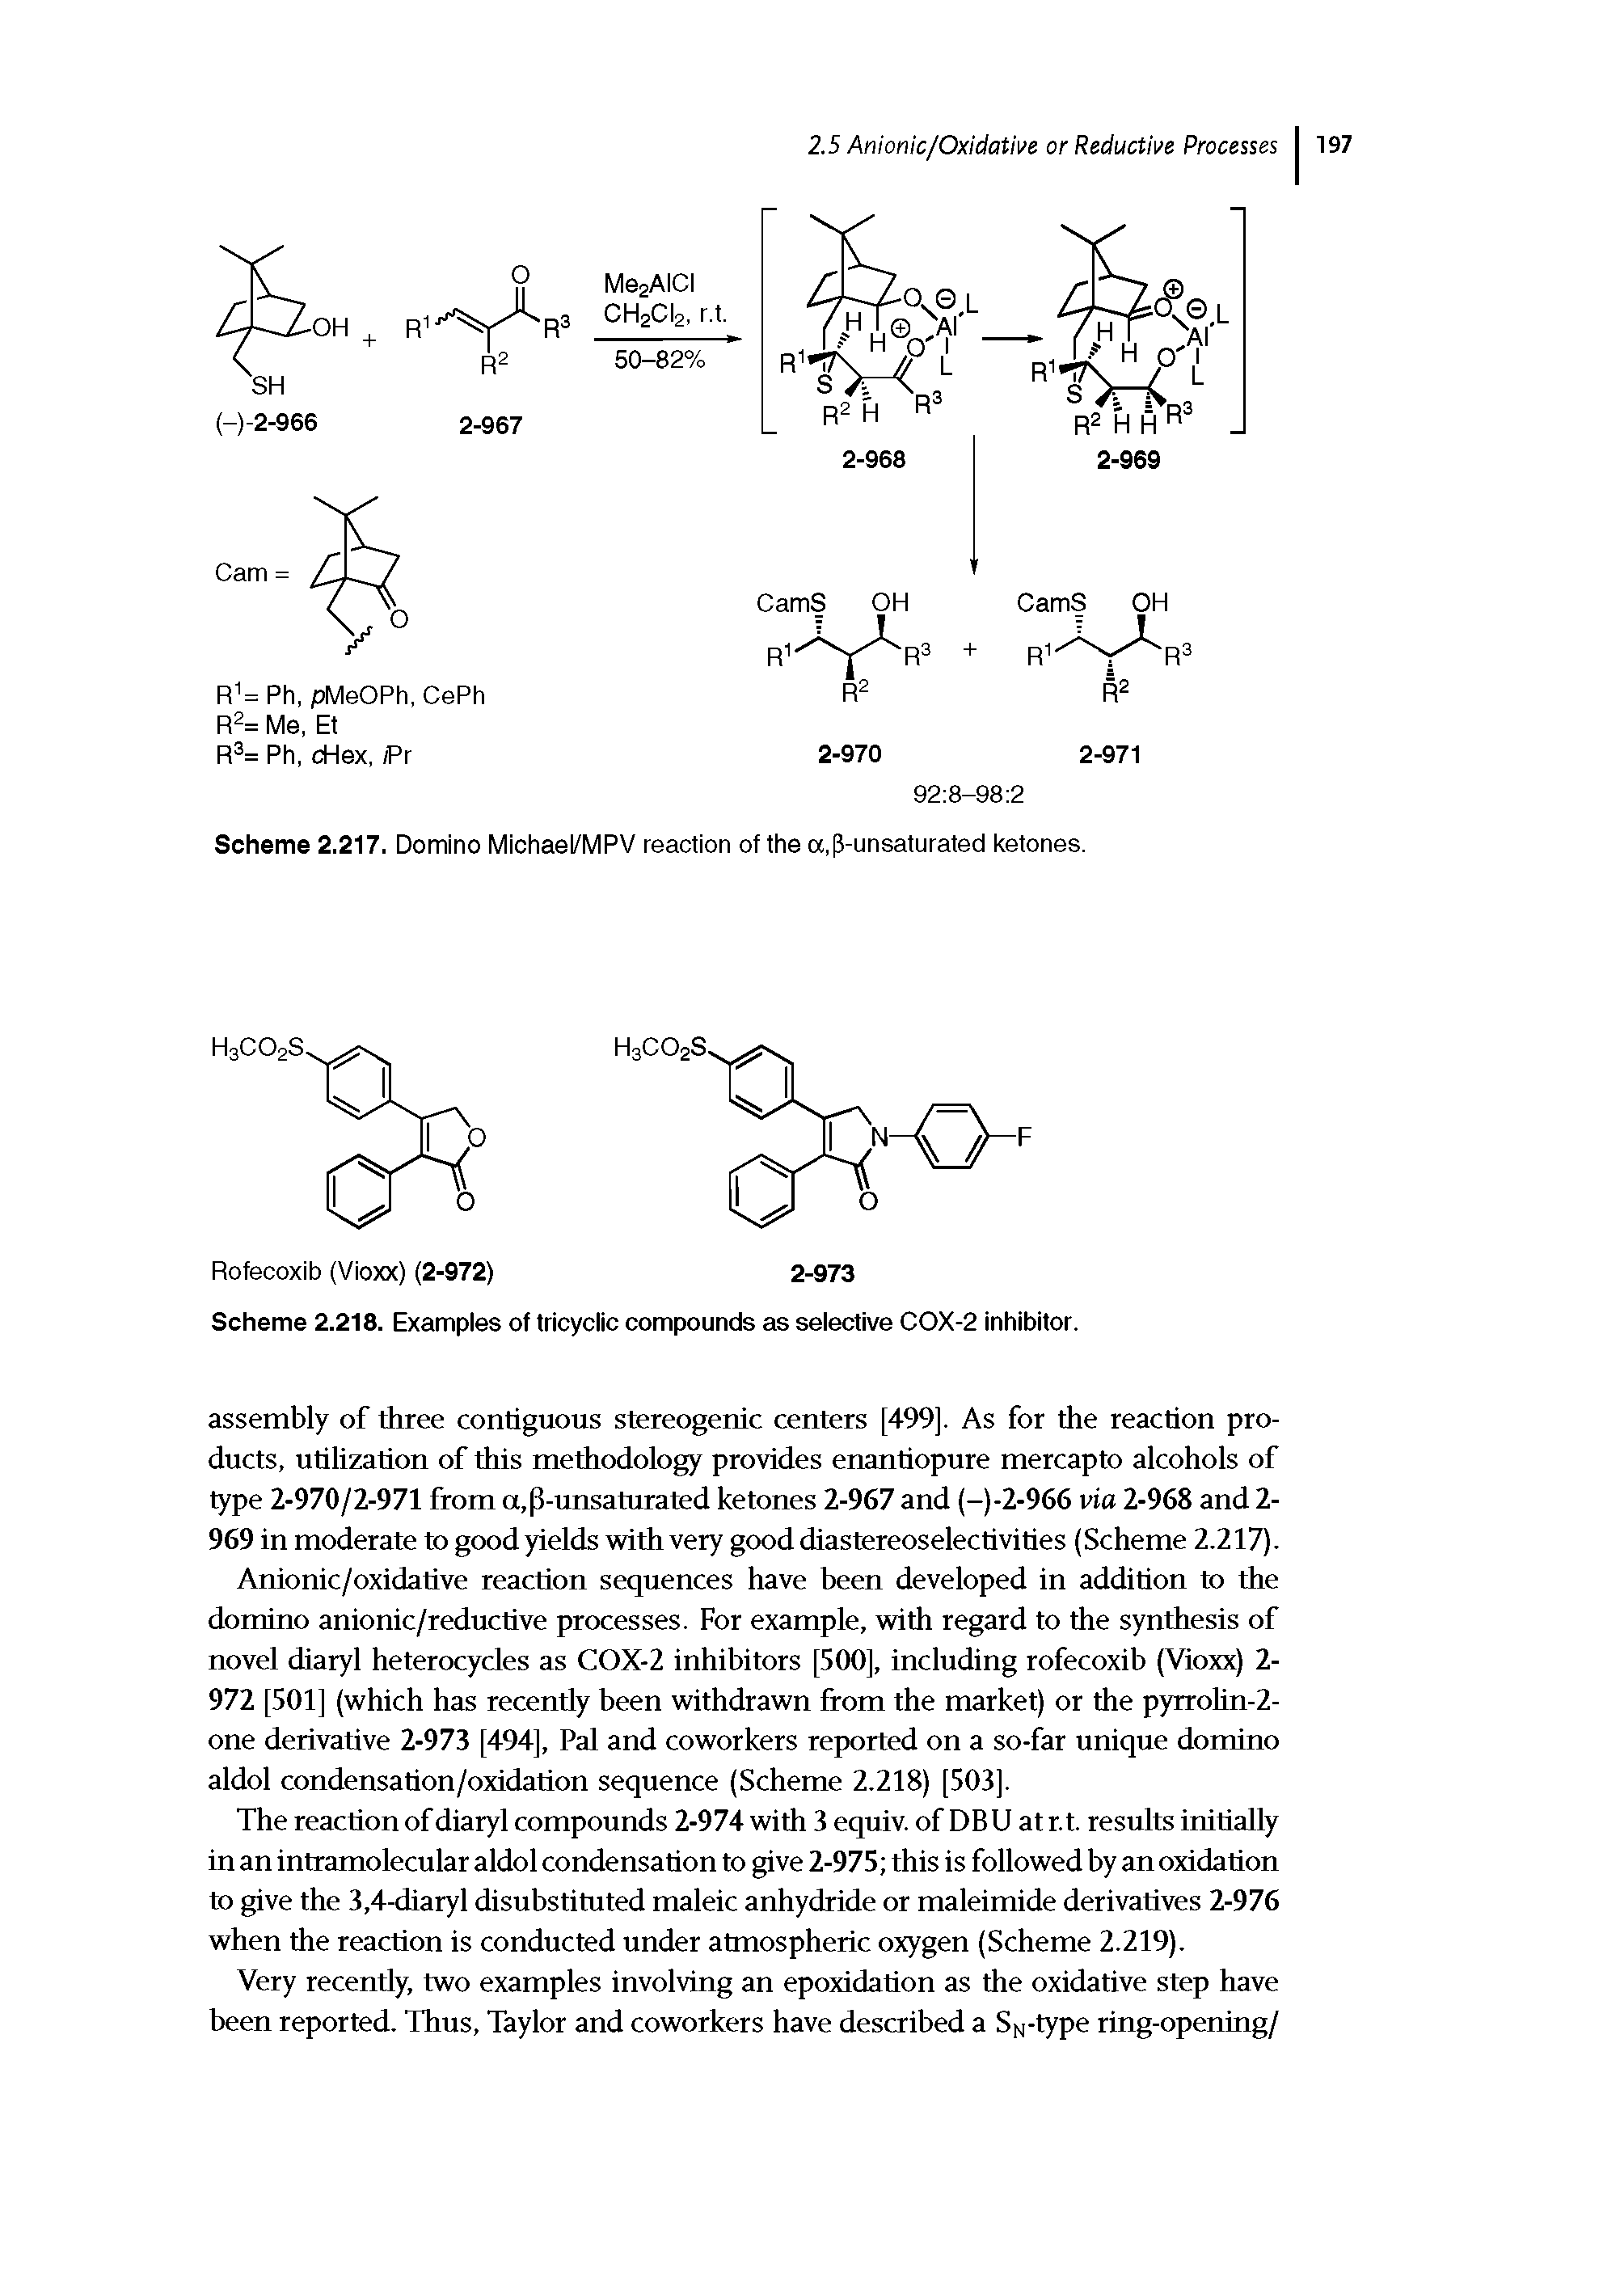 Scheme 2.217. Domino Michael/MPV reaction of the oc, 3-unsaturated ketones.